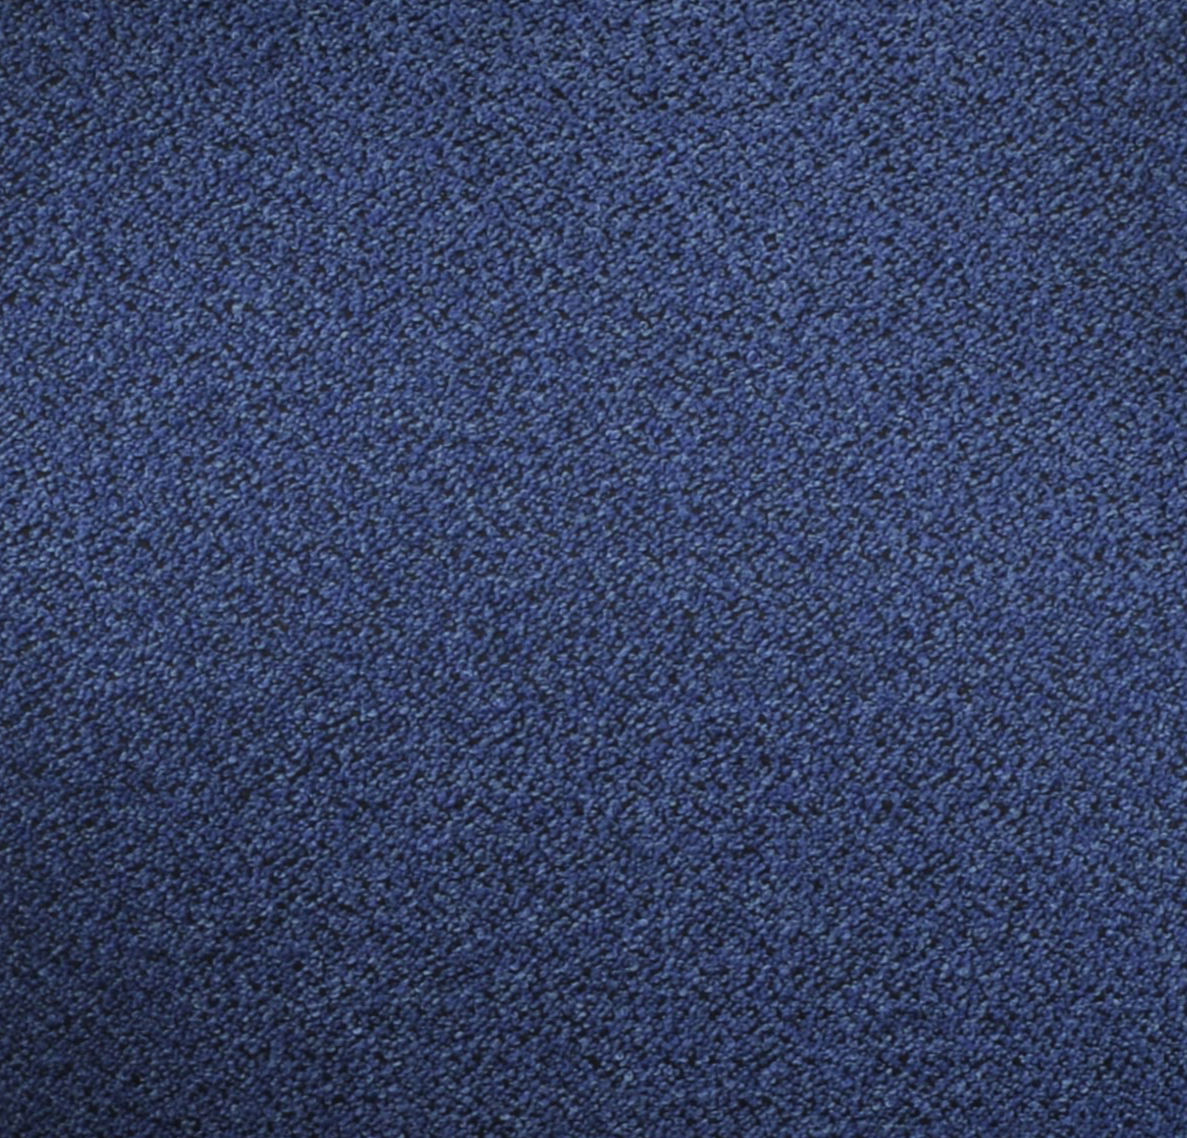 Boucle Fabric Blue-Black(Juno-24)